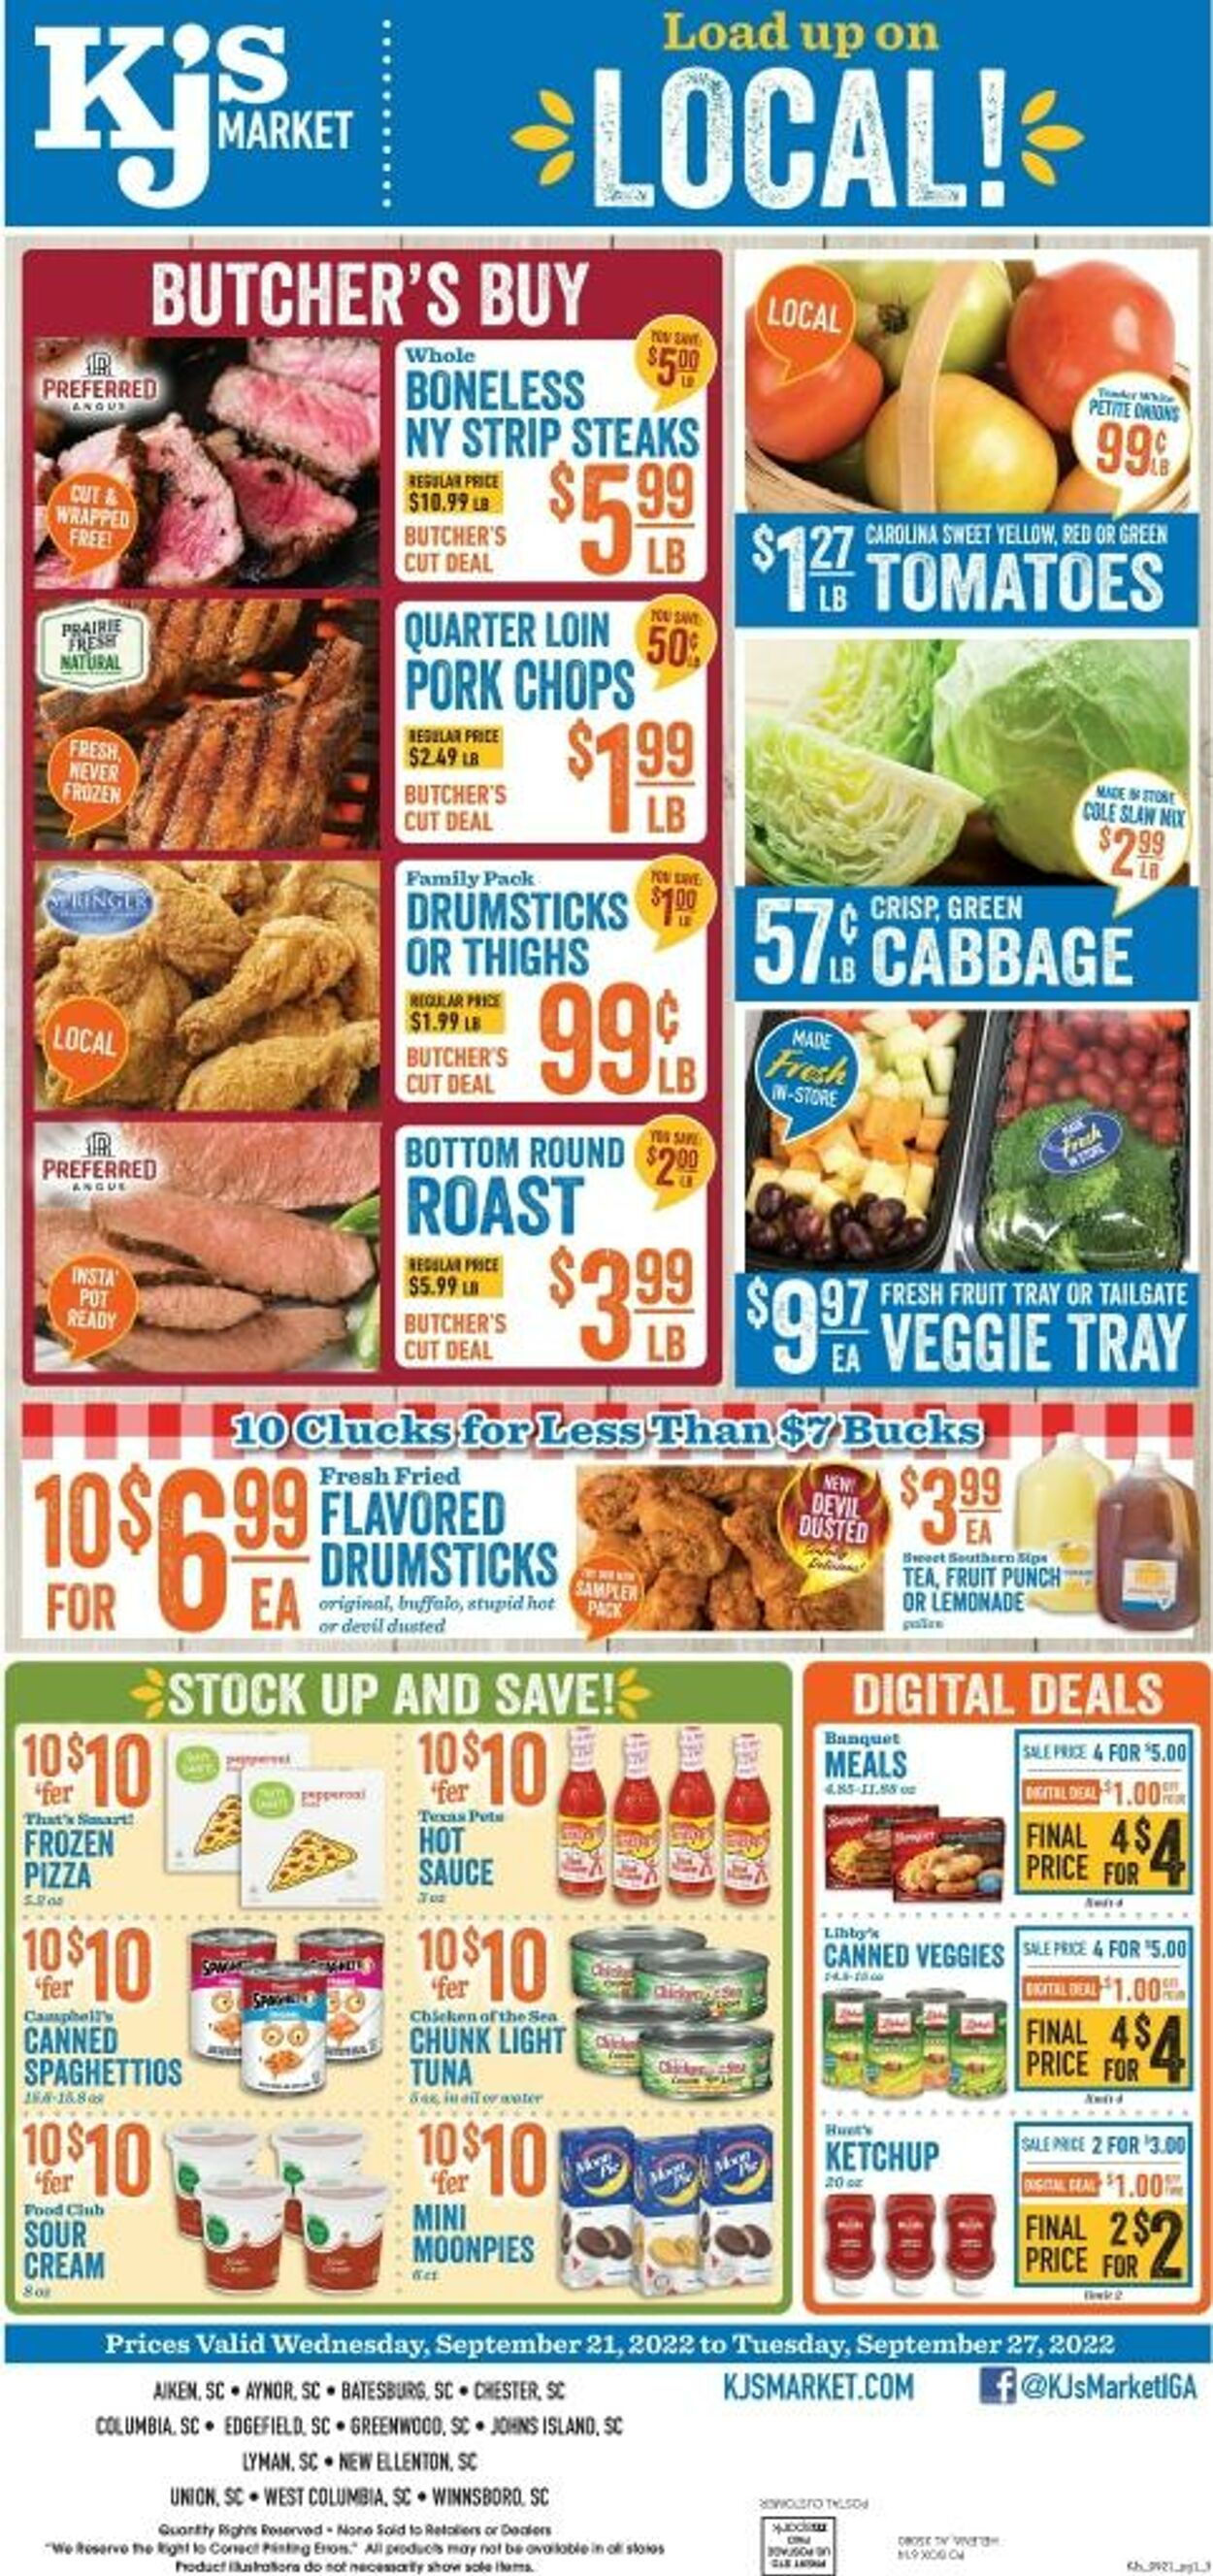 Weekly ad KJ's Market 09/21/2022 - 09/27/2022